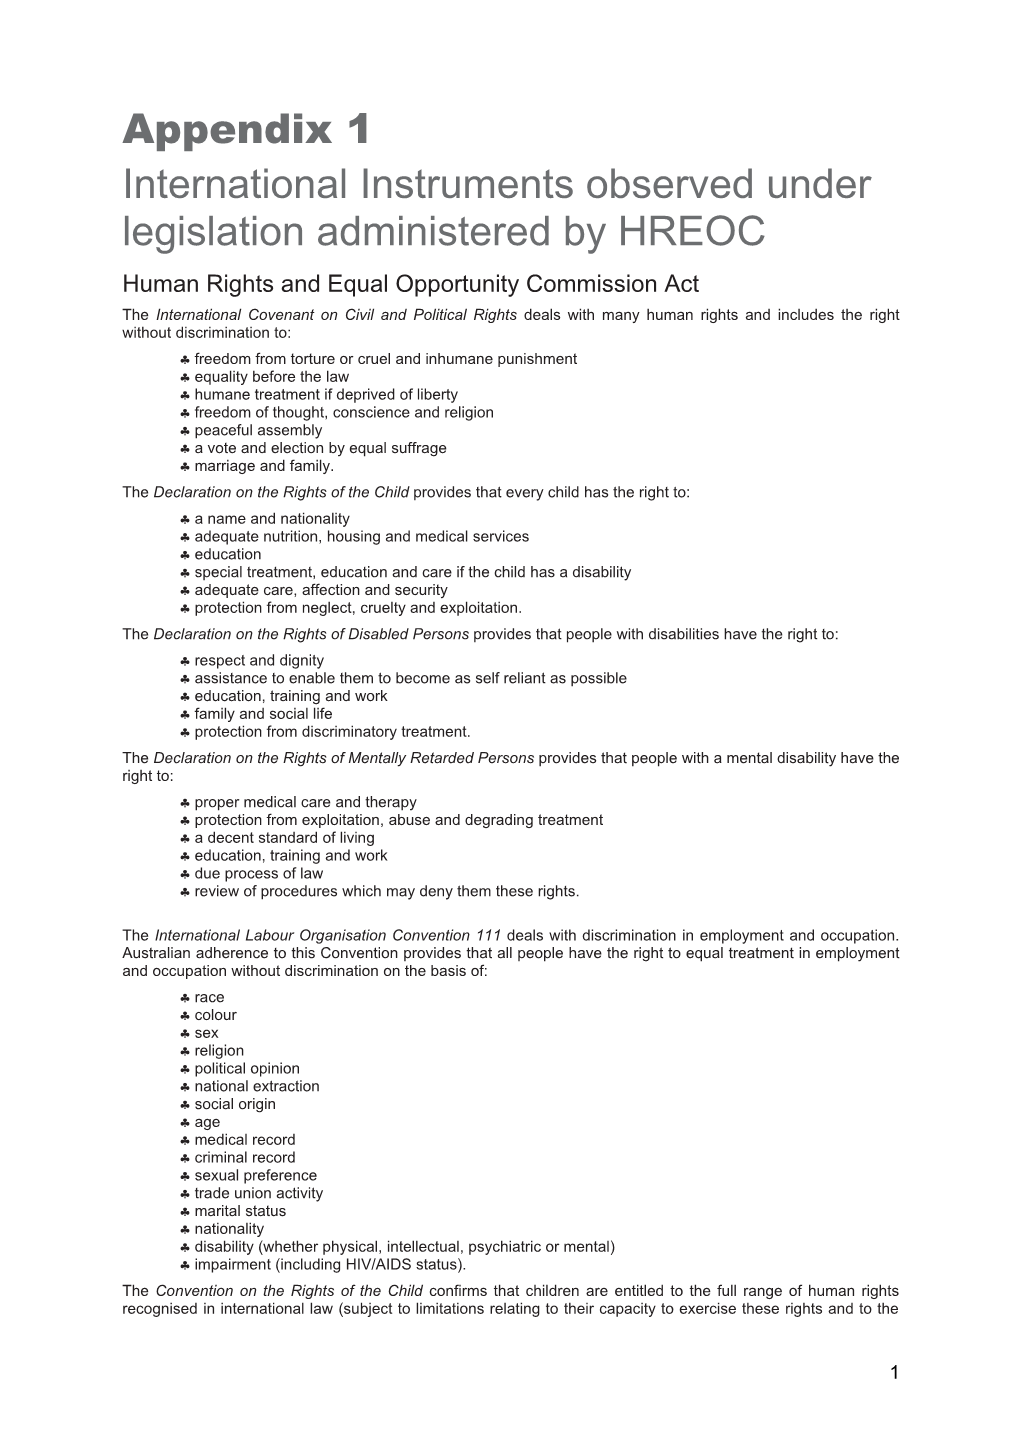 International Instruments Observed Under Legislation Administered by HREOC